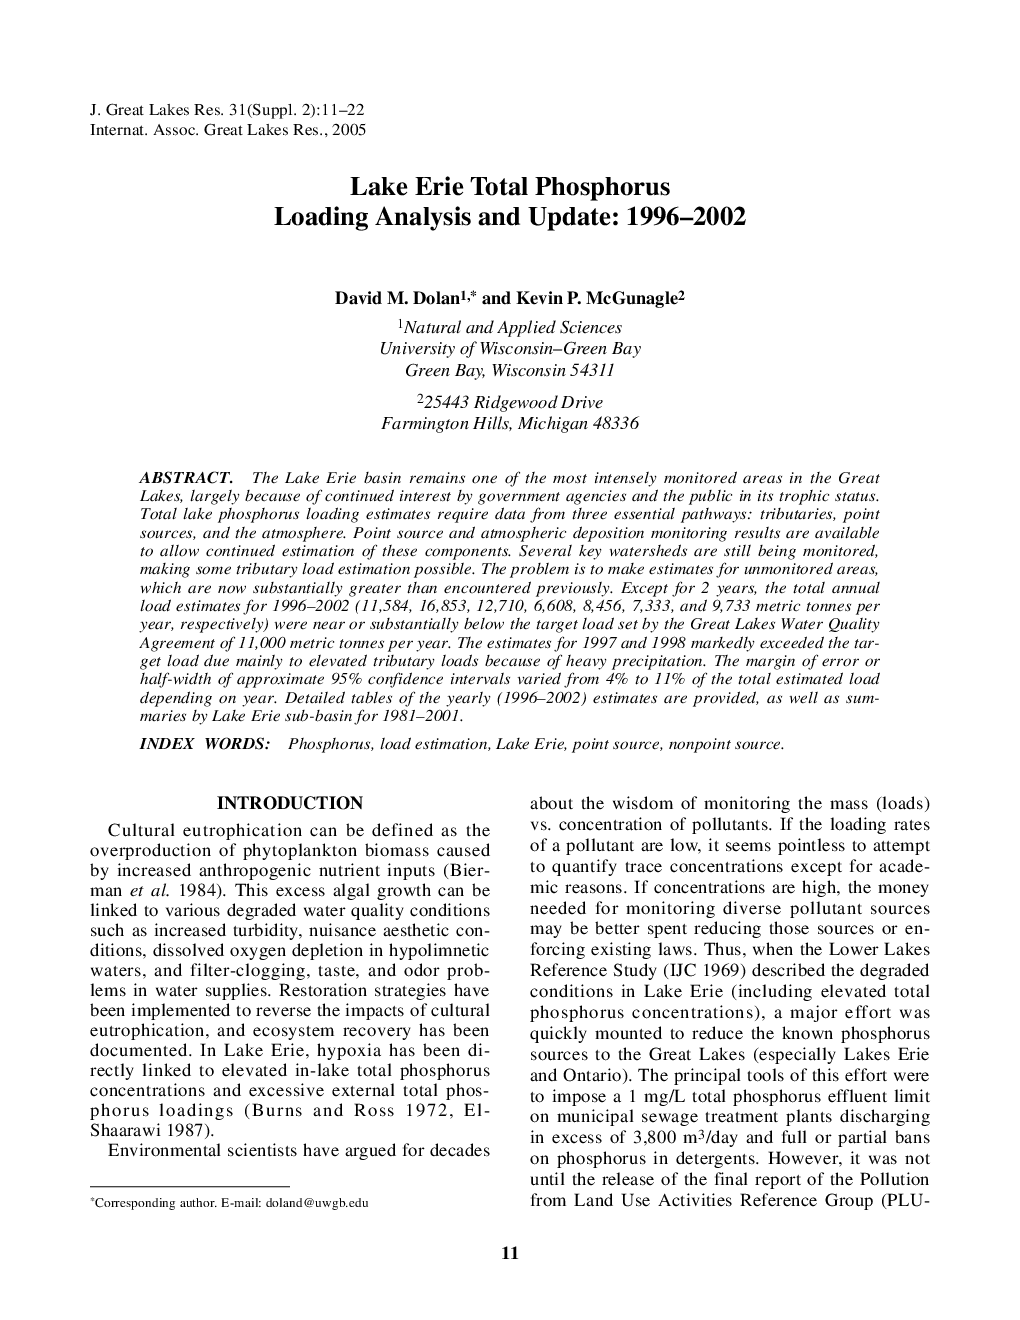 Lake Erie Total Phosphorus Loading Analysis and Update: 1996-2002